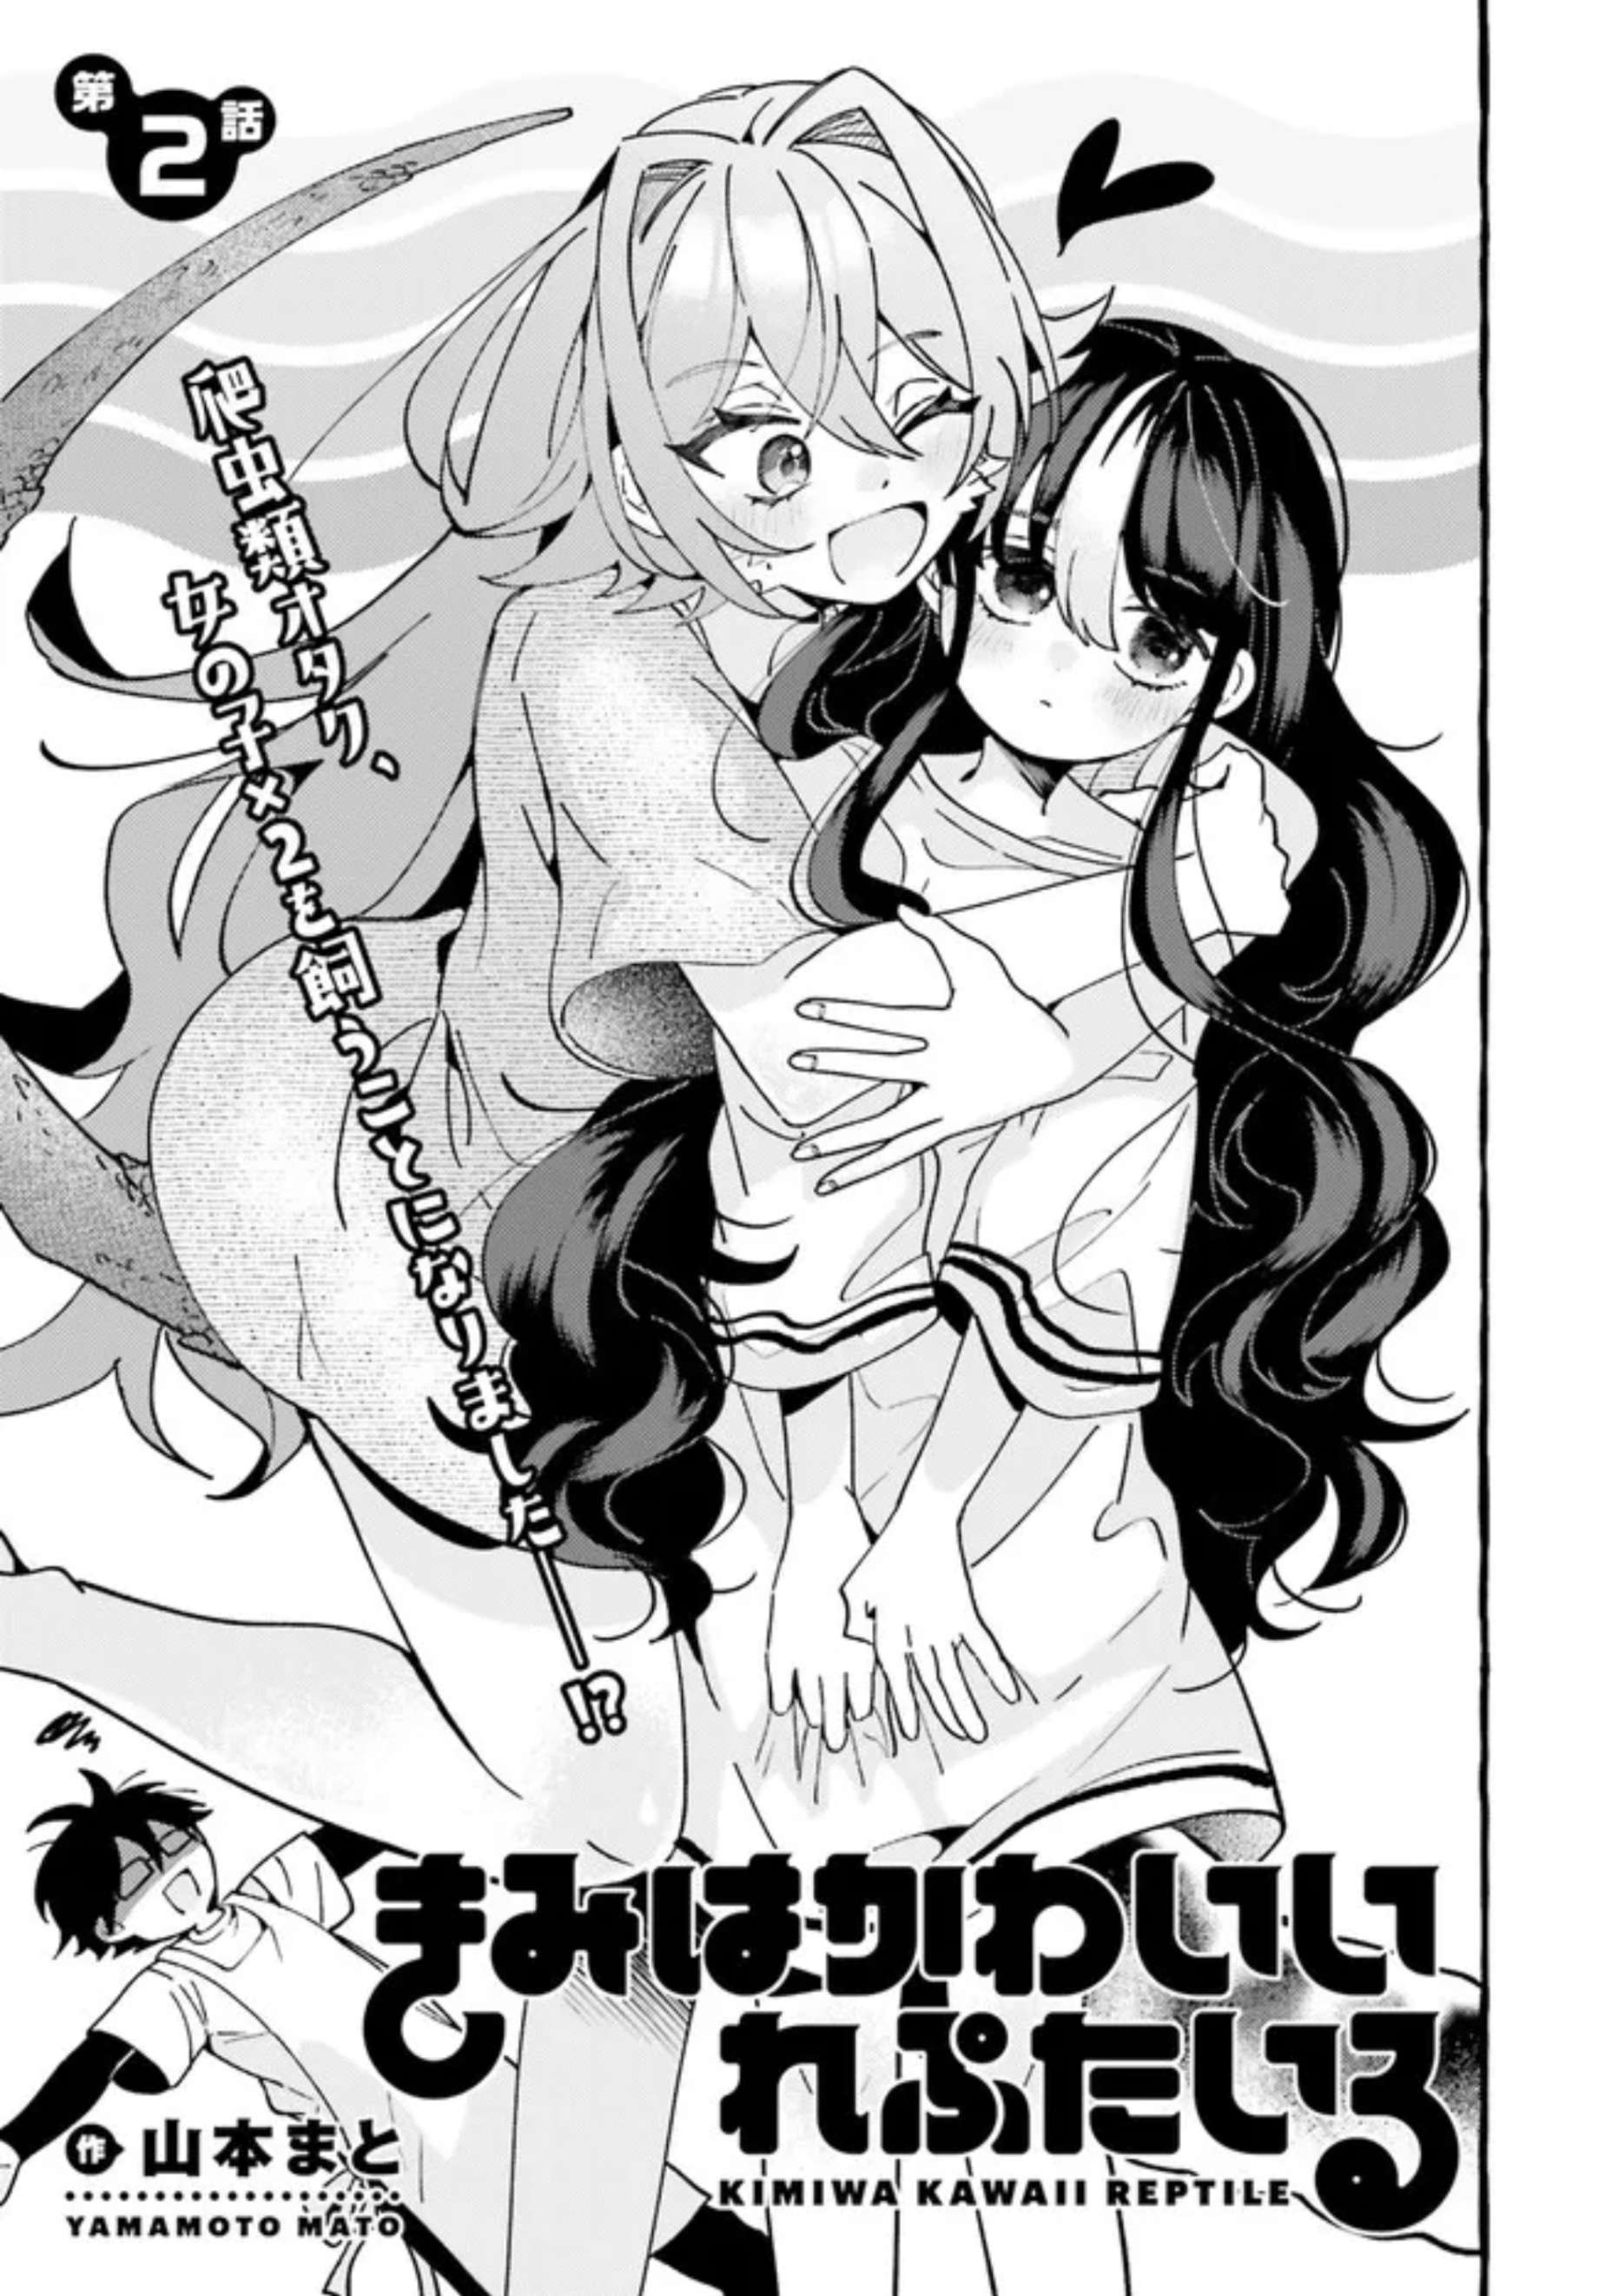 Kimi wa Kawaii Reptile - chapter 2 - #1